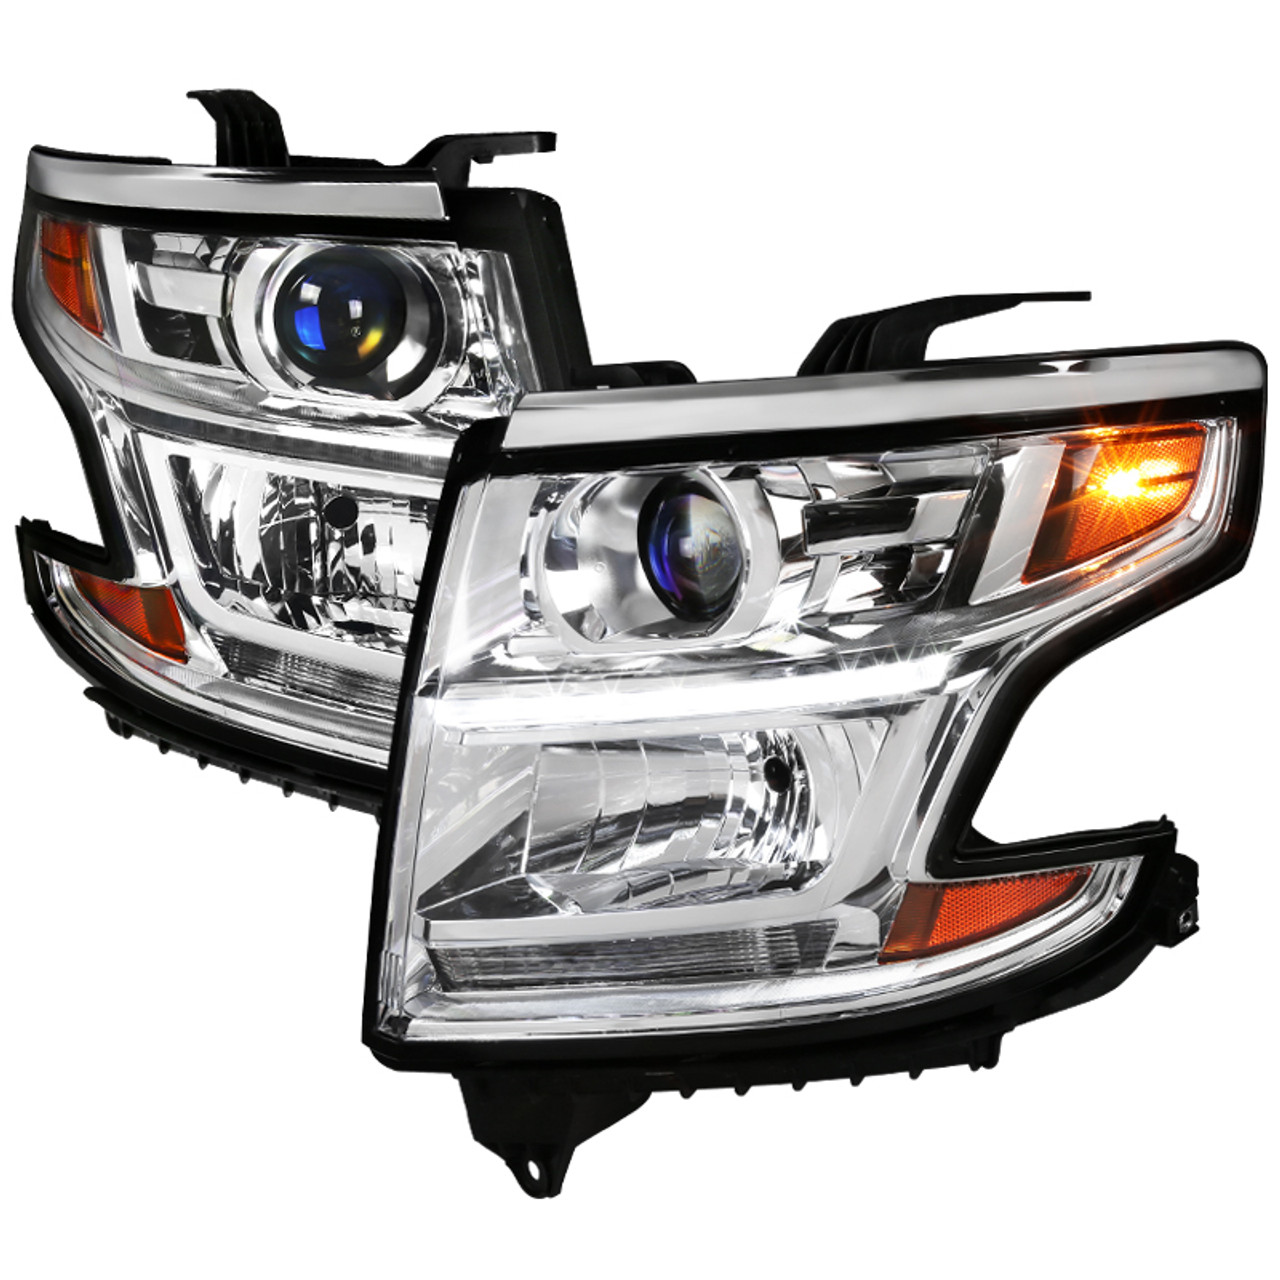 Chevrolet Suburban projector headlight